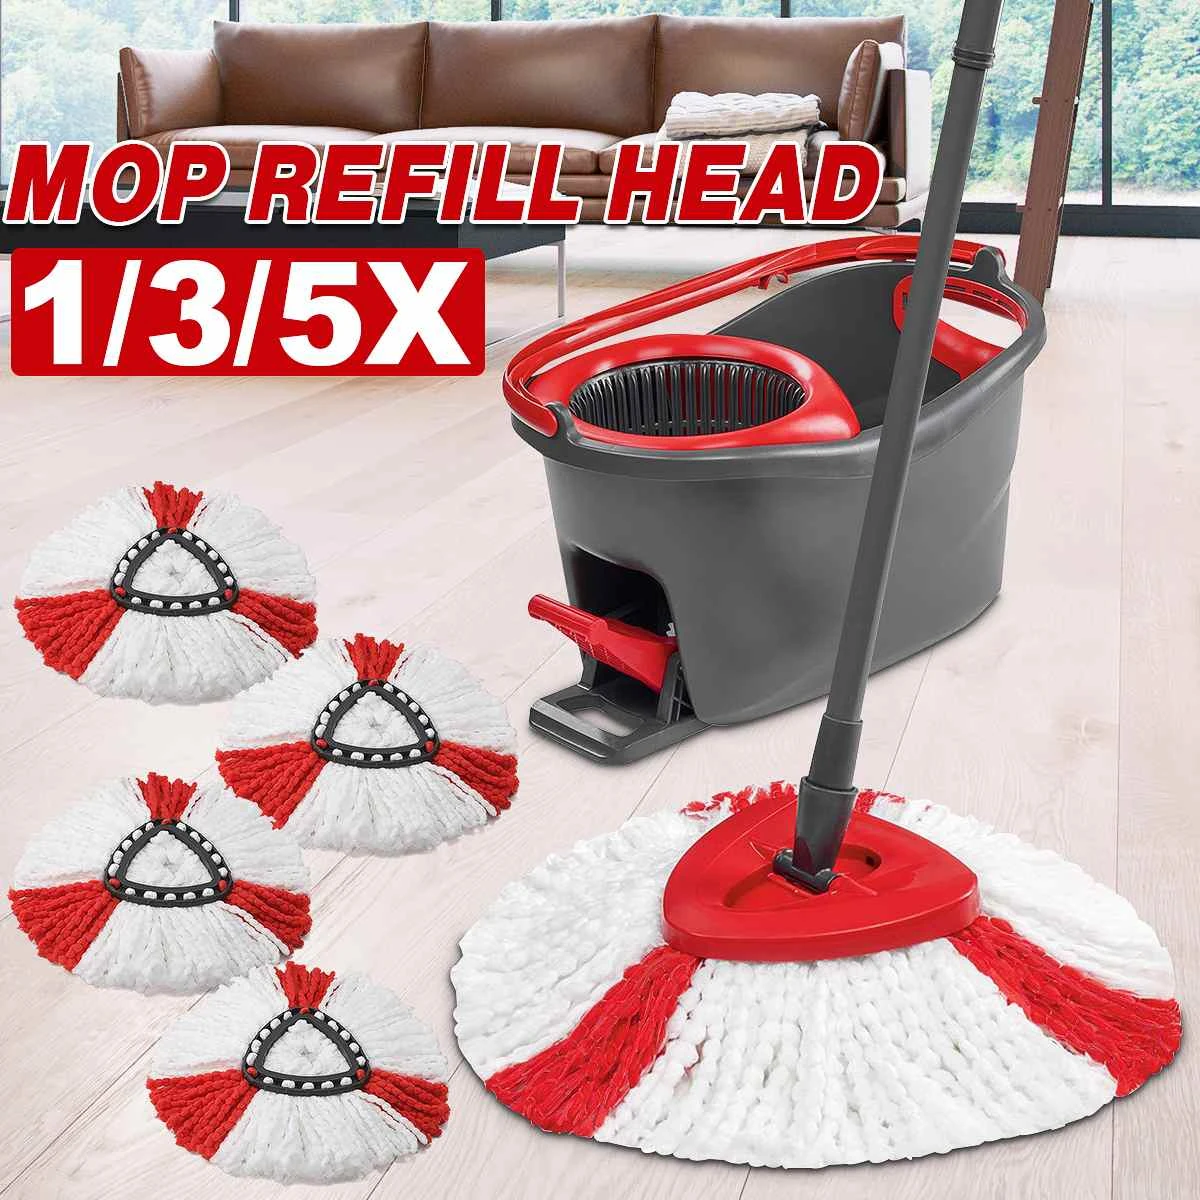 Ploeg Durven klein Microfiber Replacement Head | Vileda Spin Mop Replacement | Microfiber Mop  Accessories - Cleaning Cloths - Aliexpress